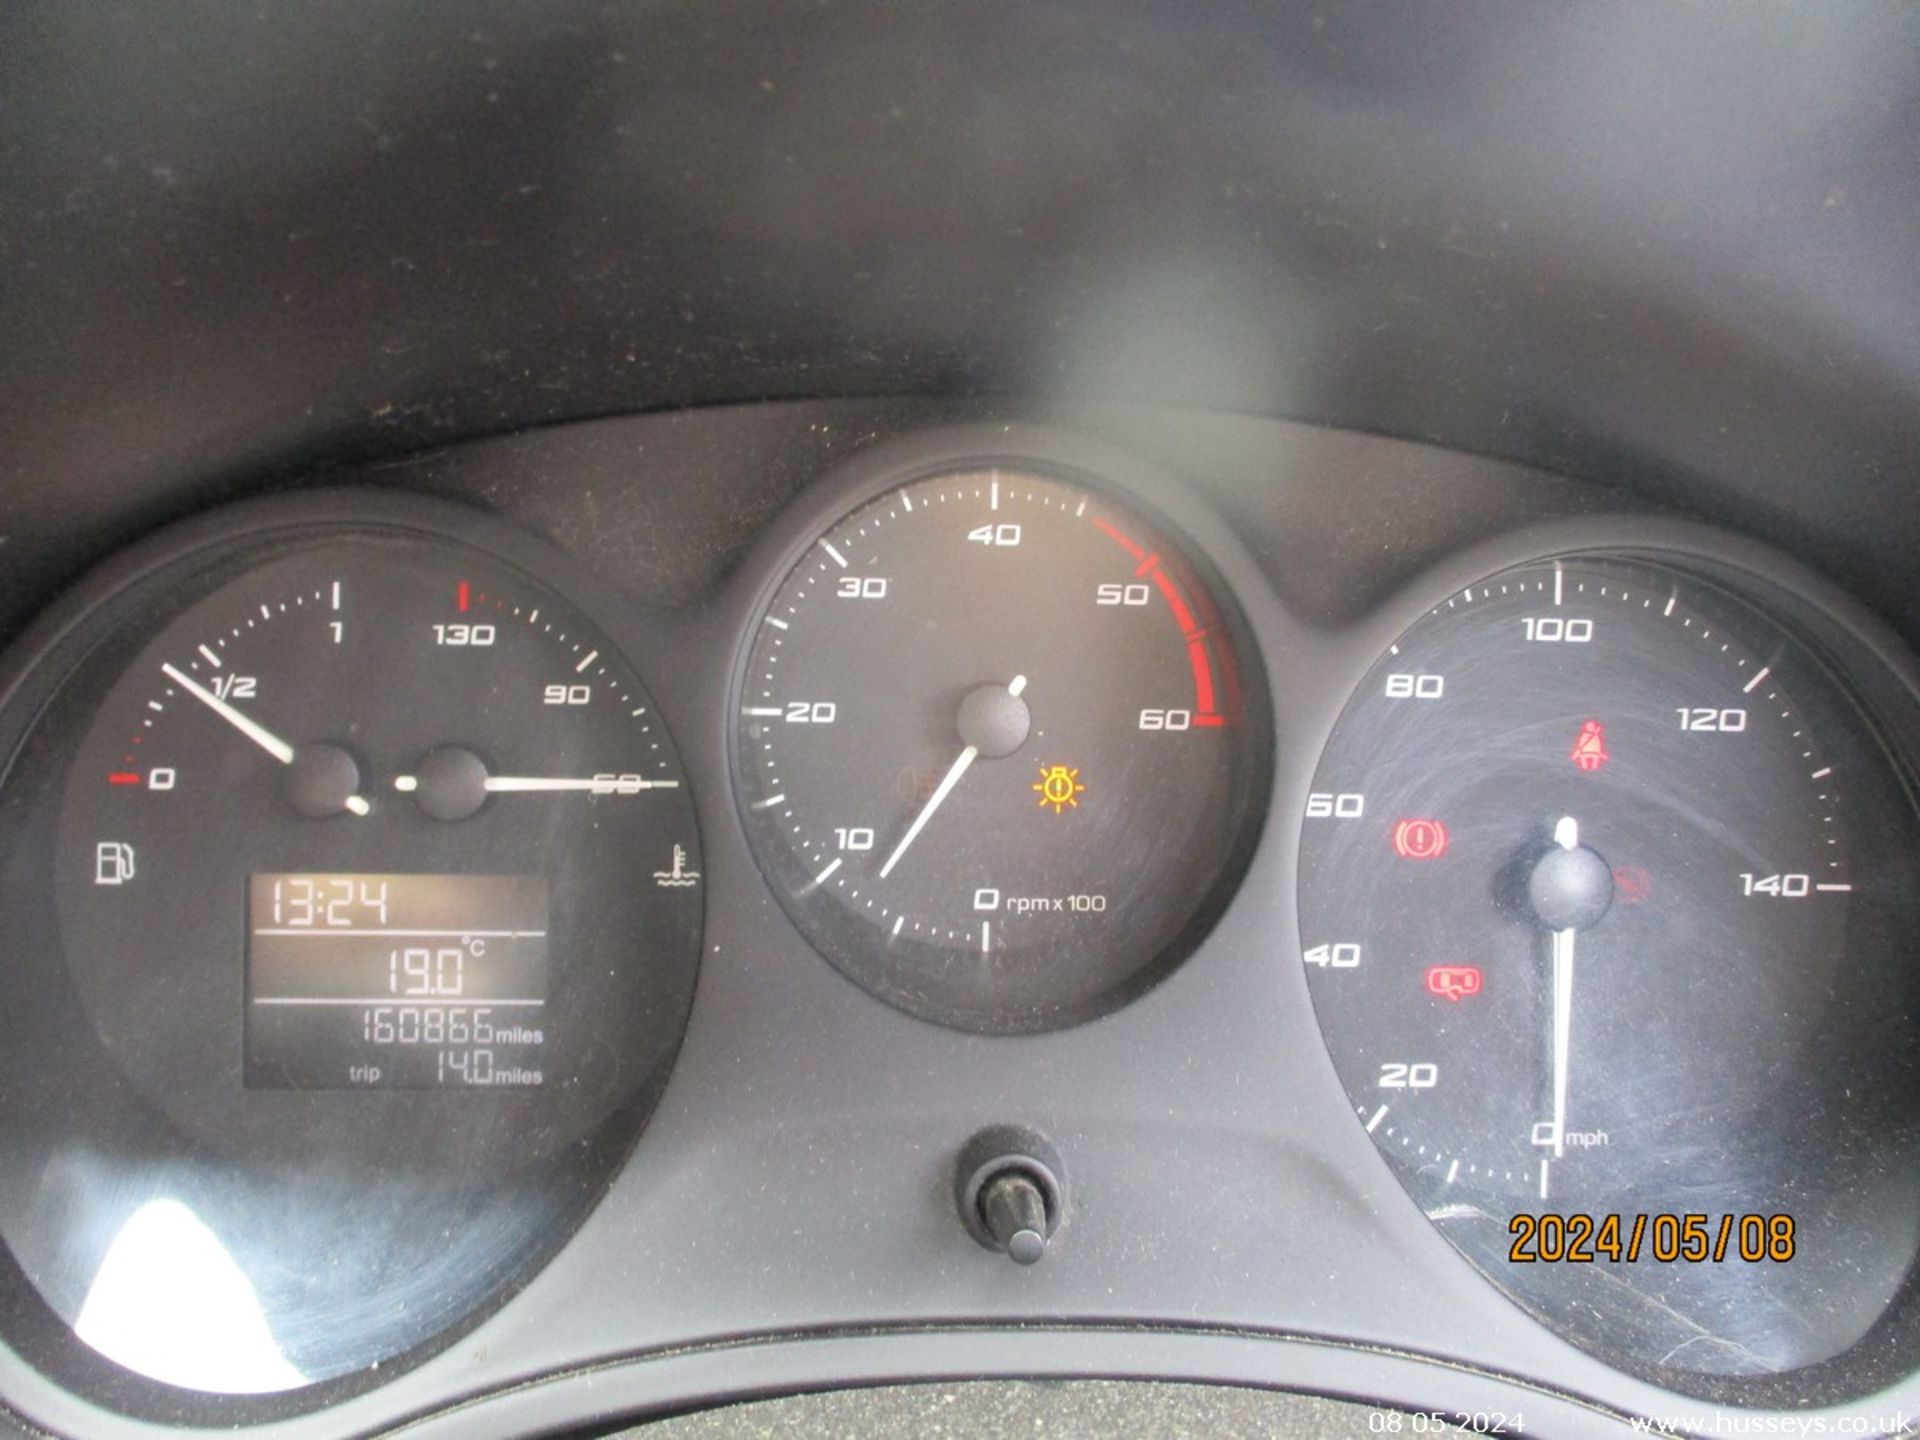 11/11 SEAT LEON S CR TDI - 1598cc 5dr Hatchback (Grey, 160k) - Image 16 of 48